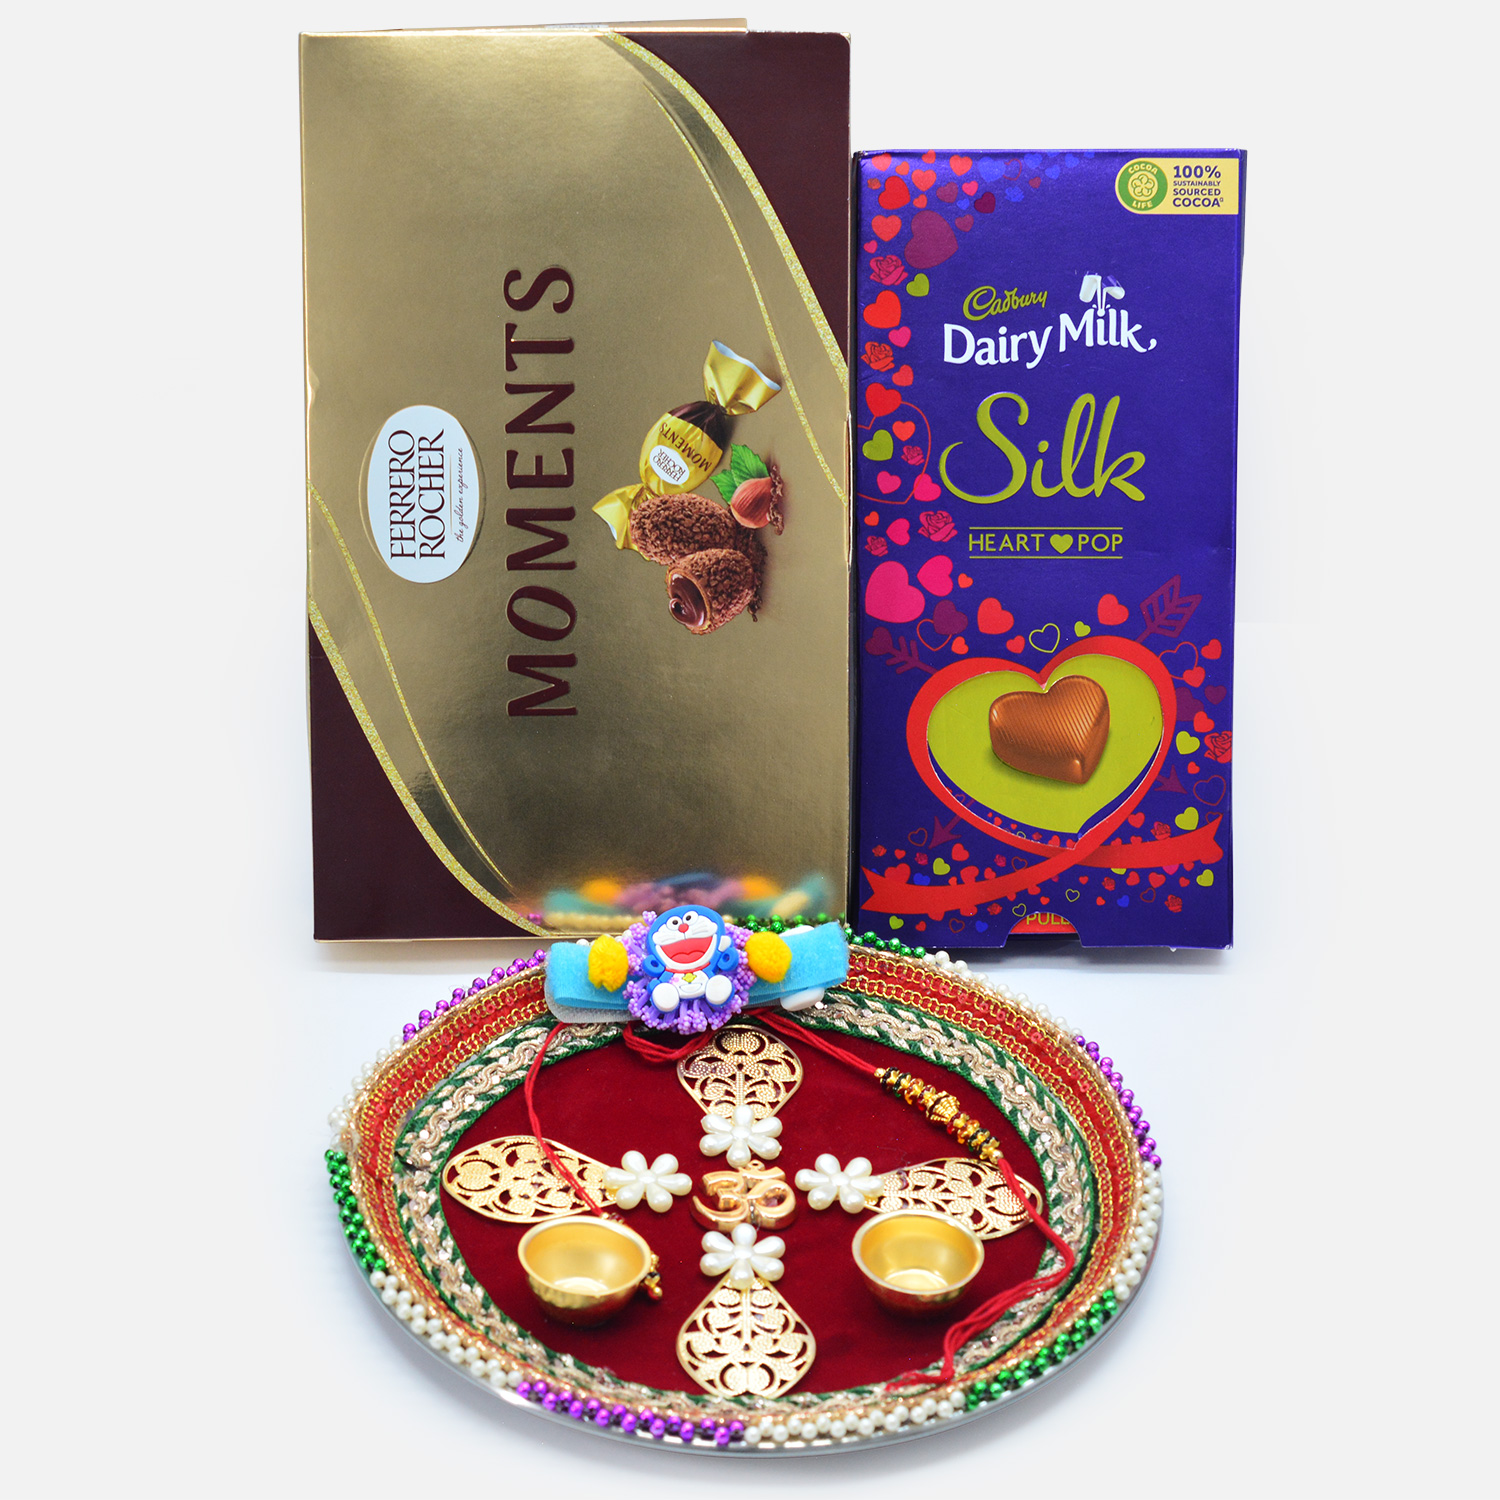 Ferrero Rocher Moments and Silk Heart Pop Chocolates with Family Rakhi Set and Designer Om Puja Thali